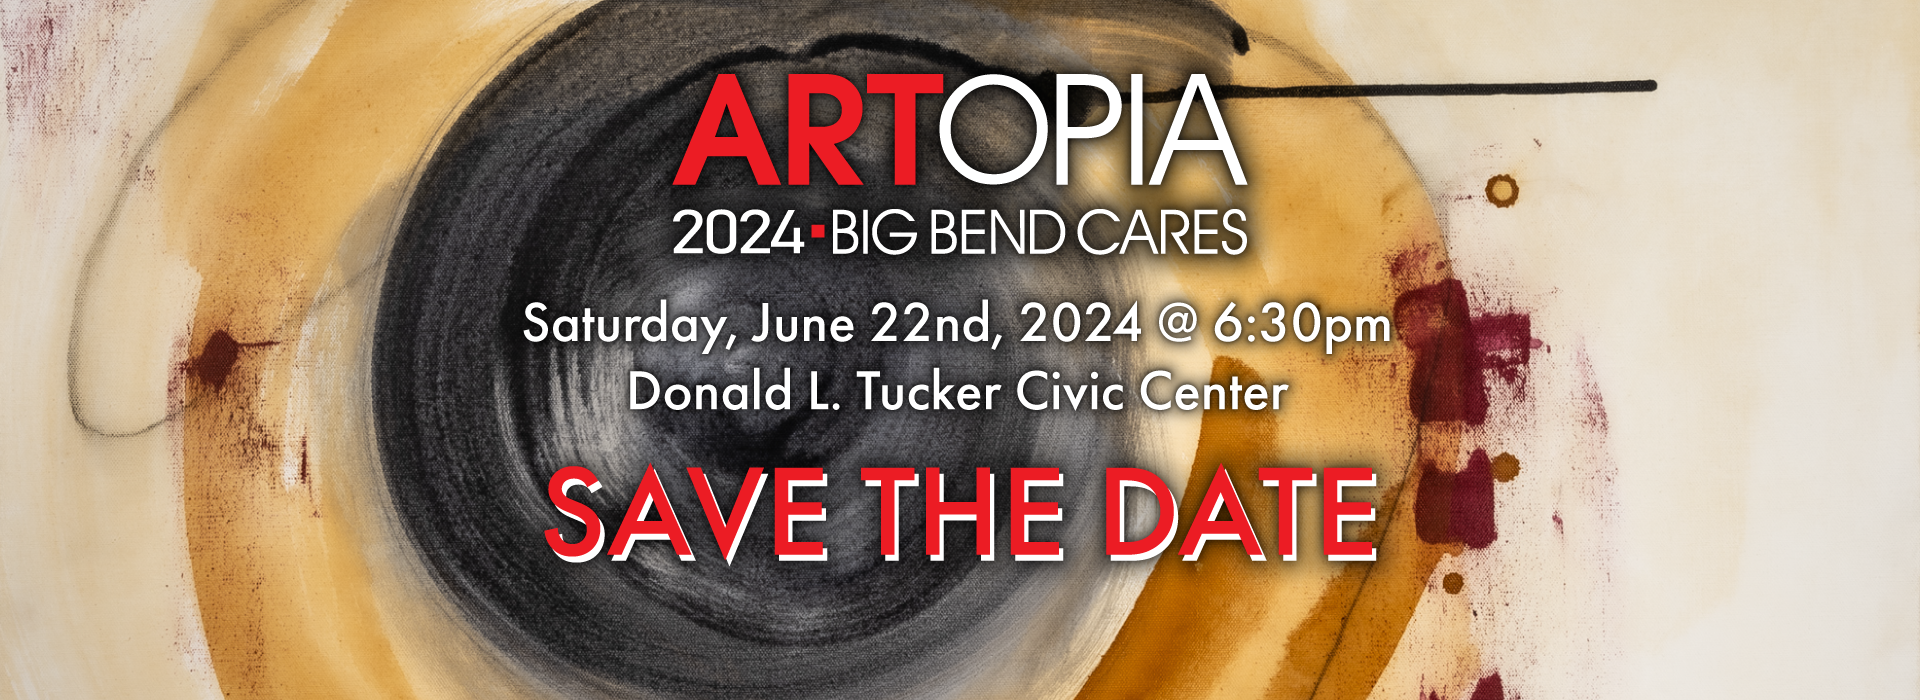 Artopia 2024 Save the Date LayerSlider